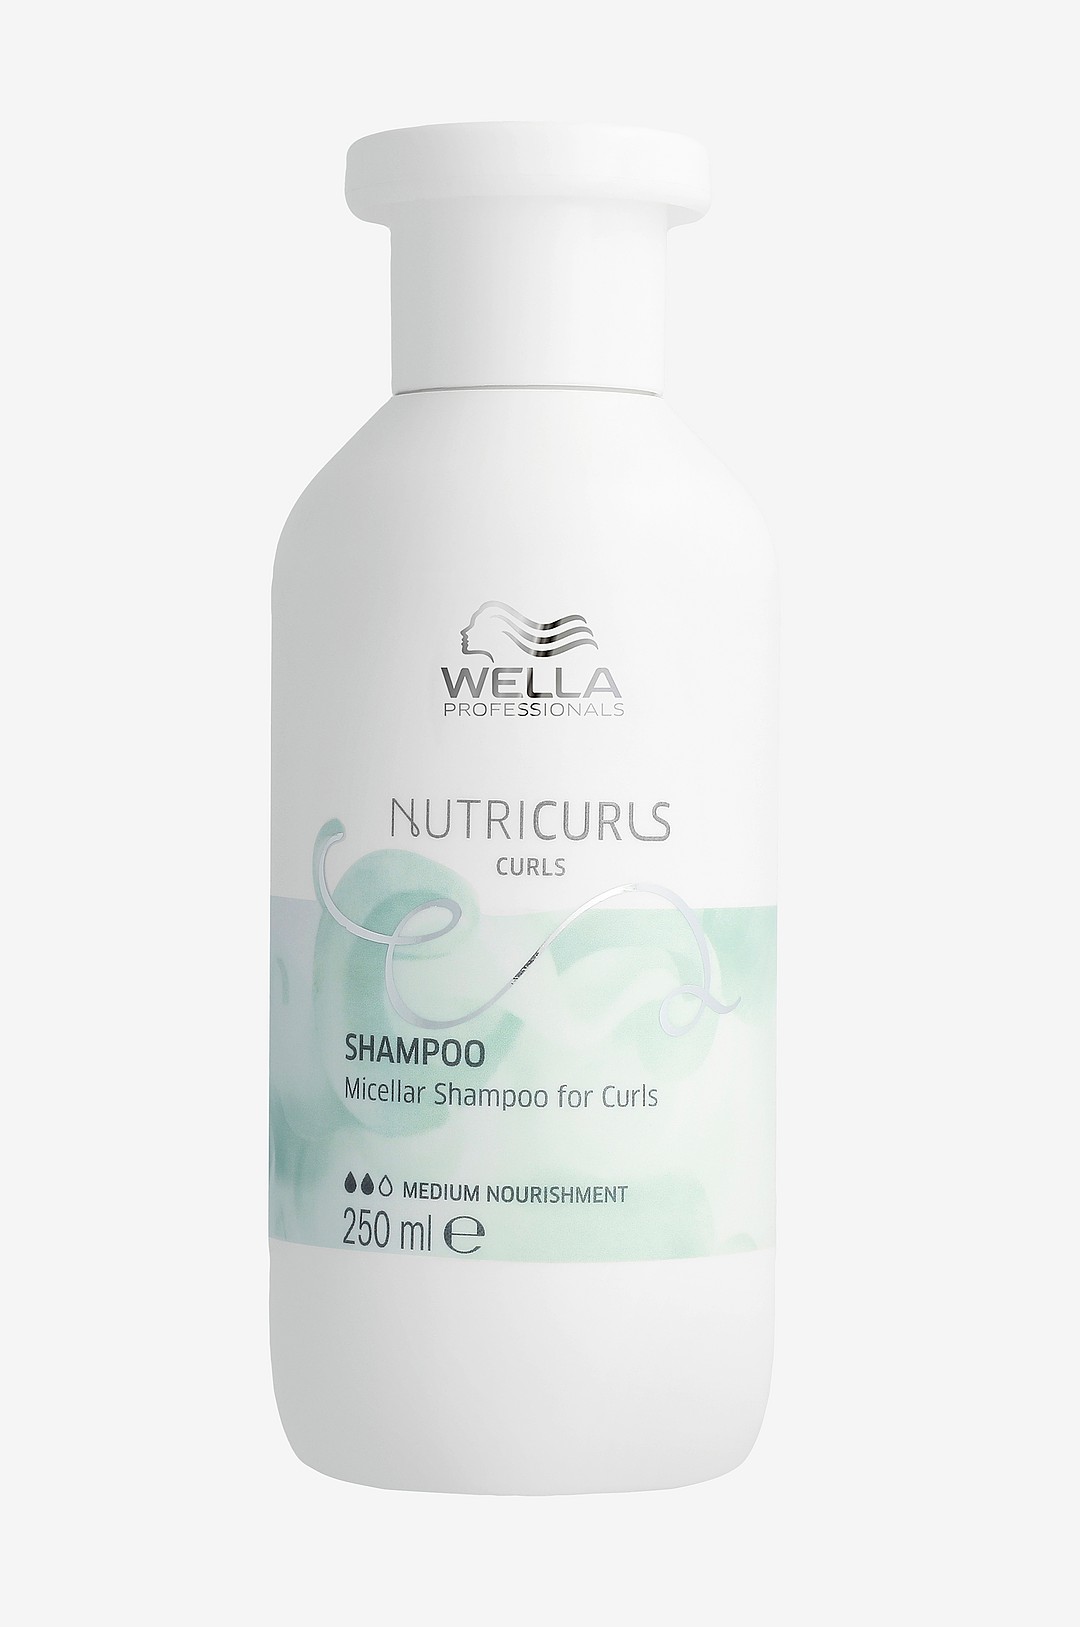 Wella Professionals - Nutricurls Curls Shampoo 250 ml - Transparent